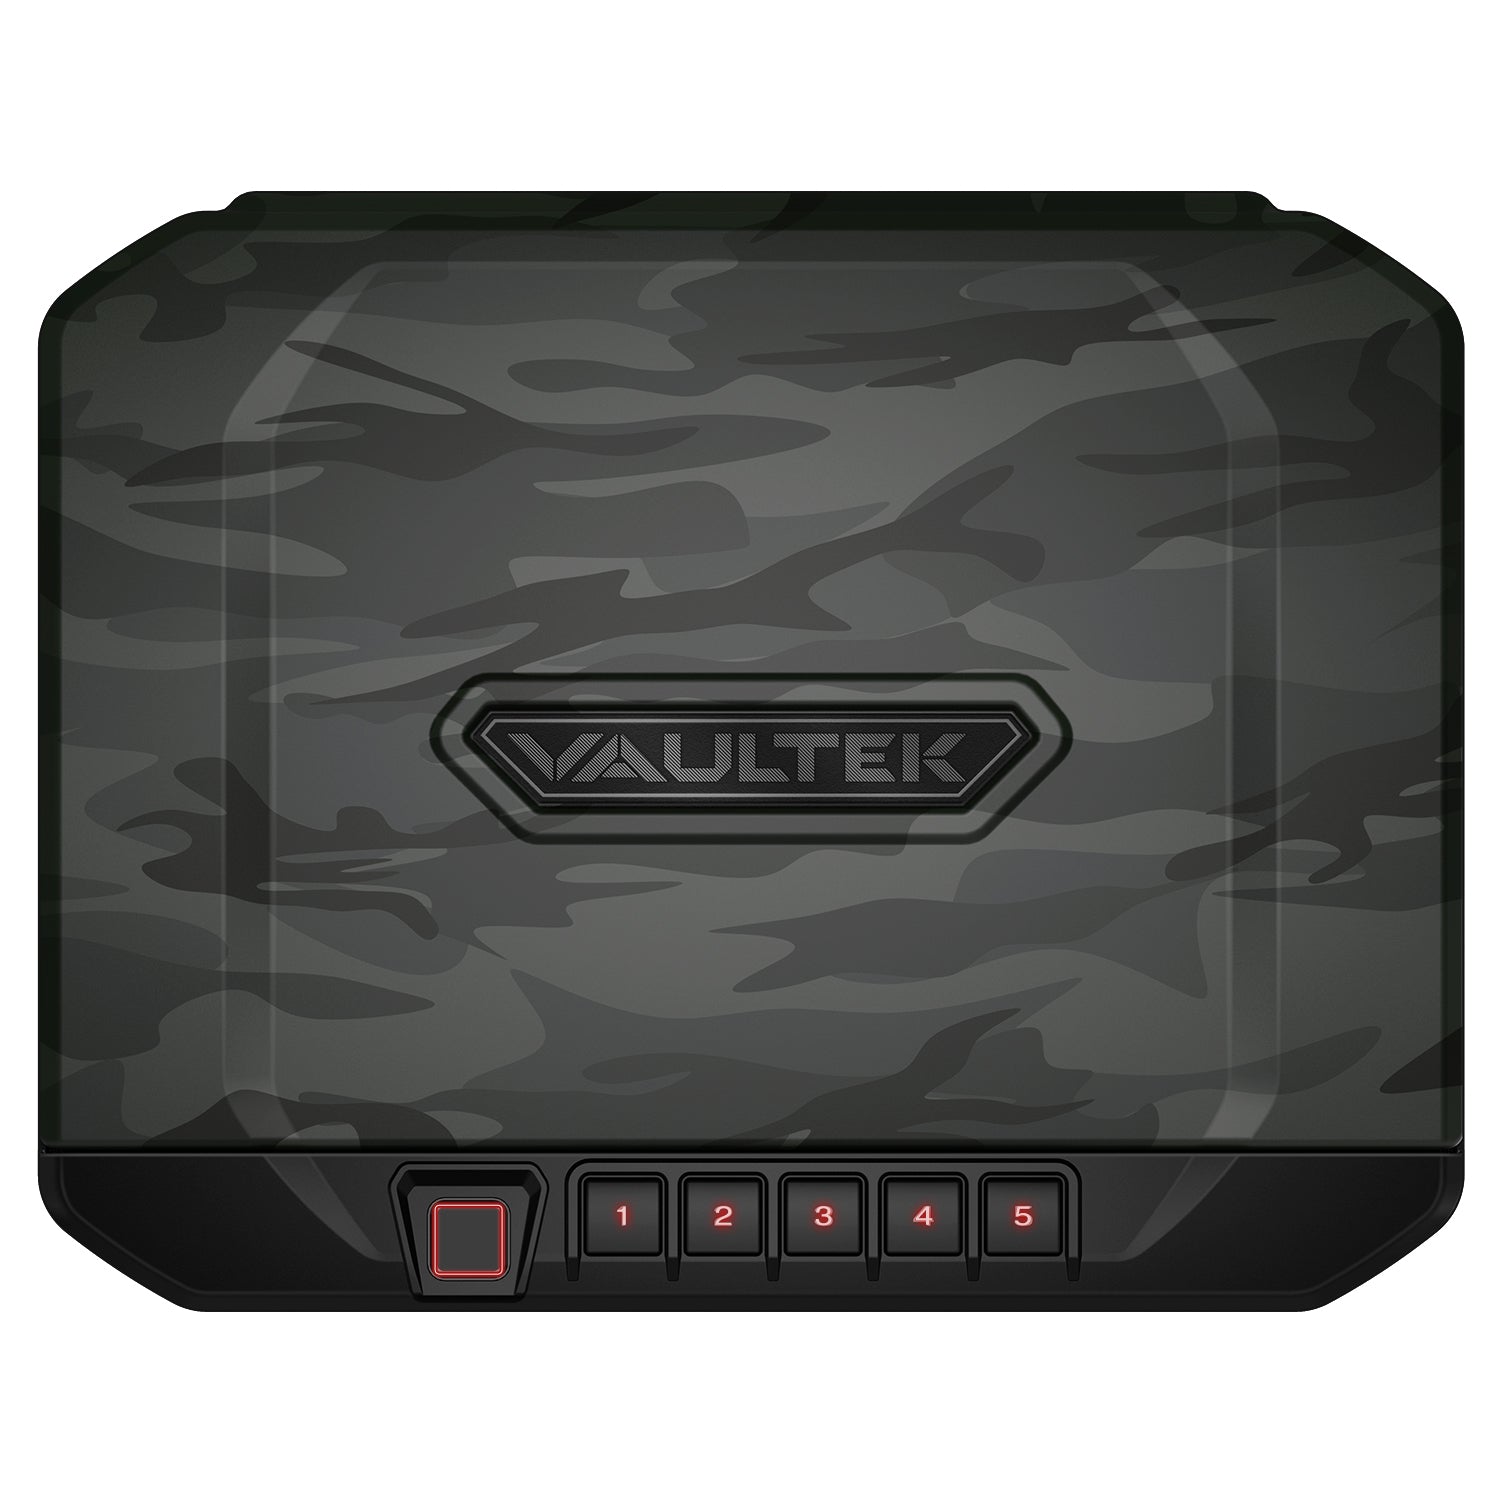 Vaultek - 20 series vs20i compact bluetooth and biometric gun safe - covert black - MODLOCK